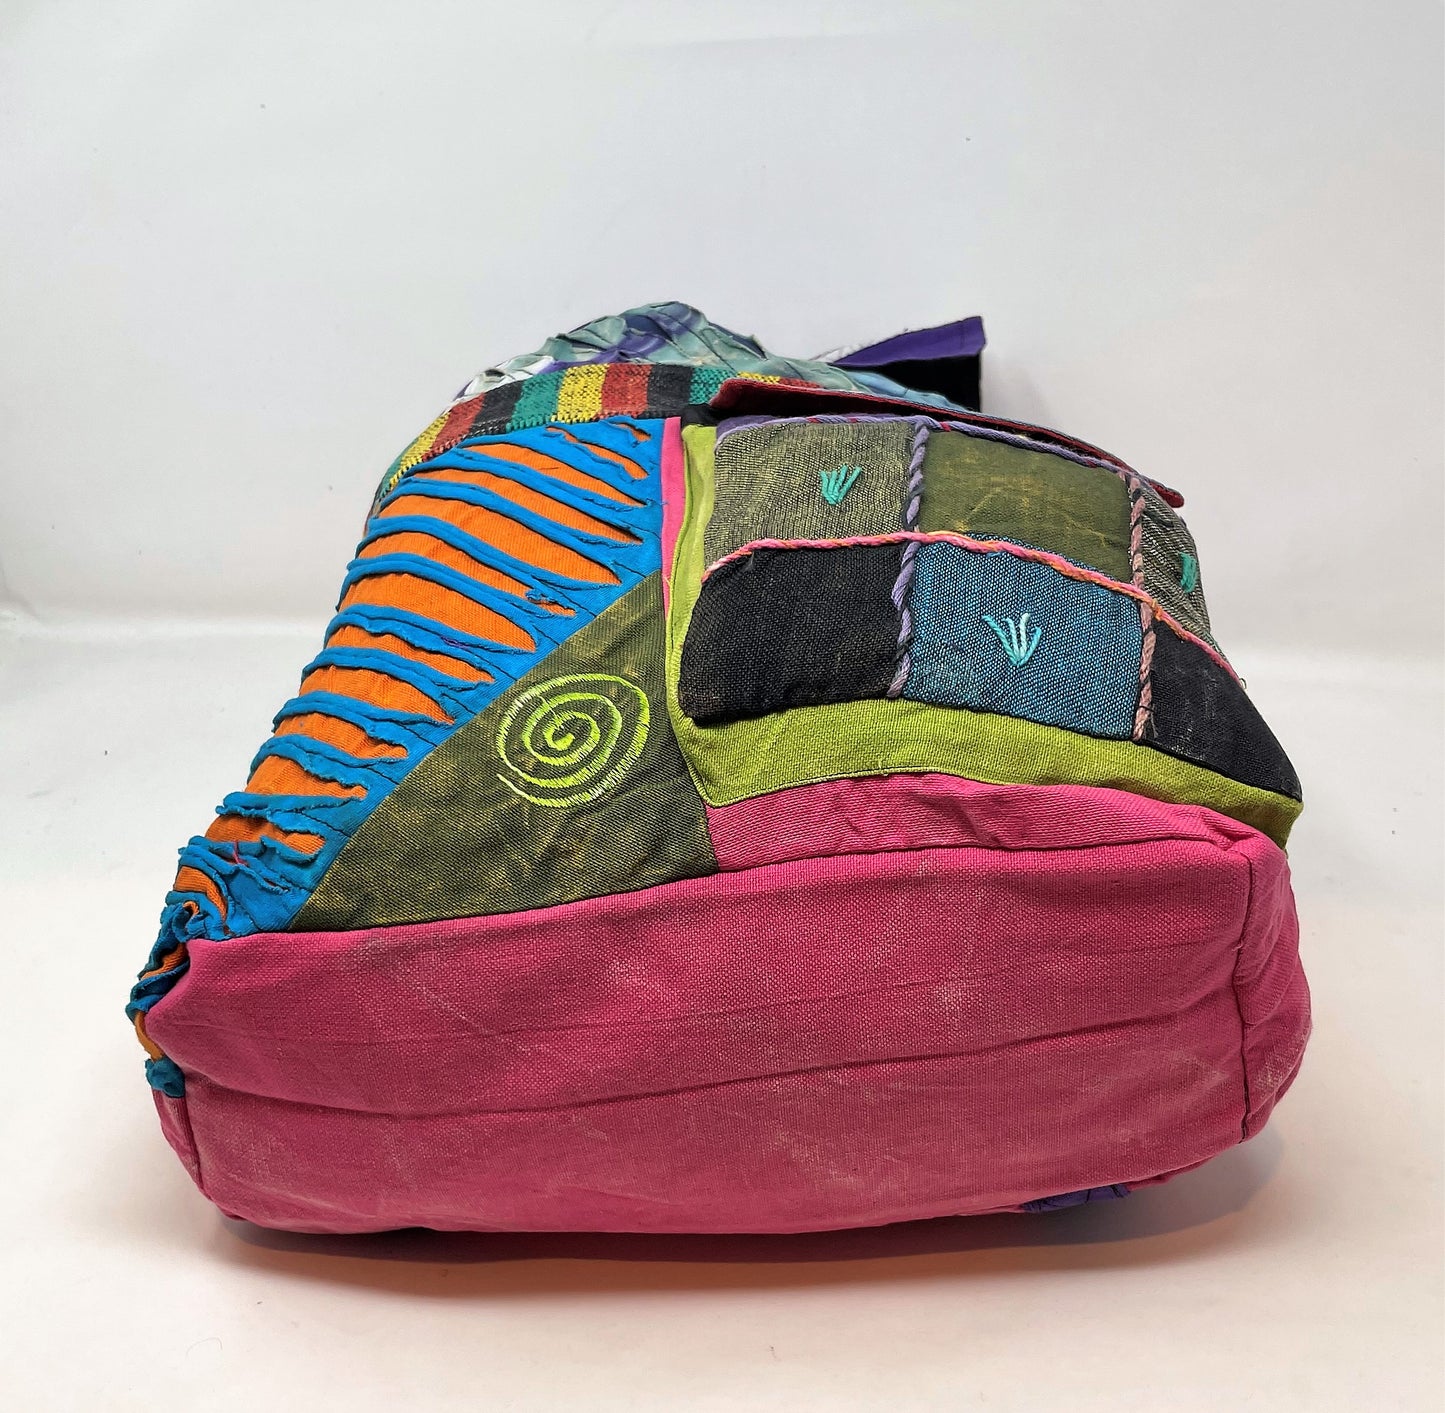 Cotton Boho Large Backpack Bag - Rasta Colors Band, Patch work